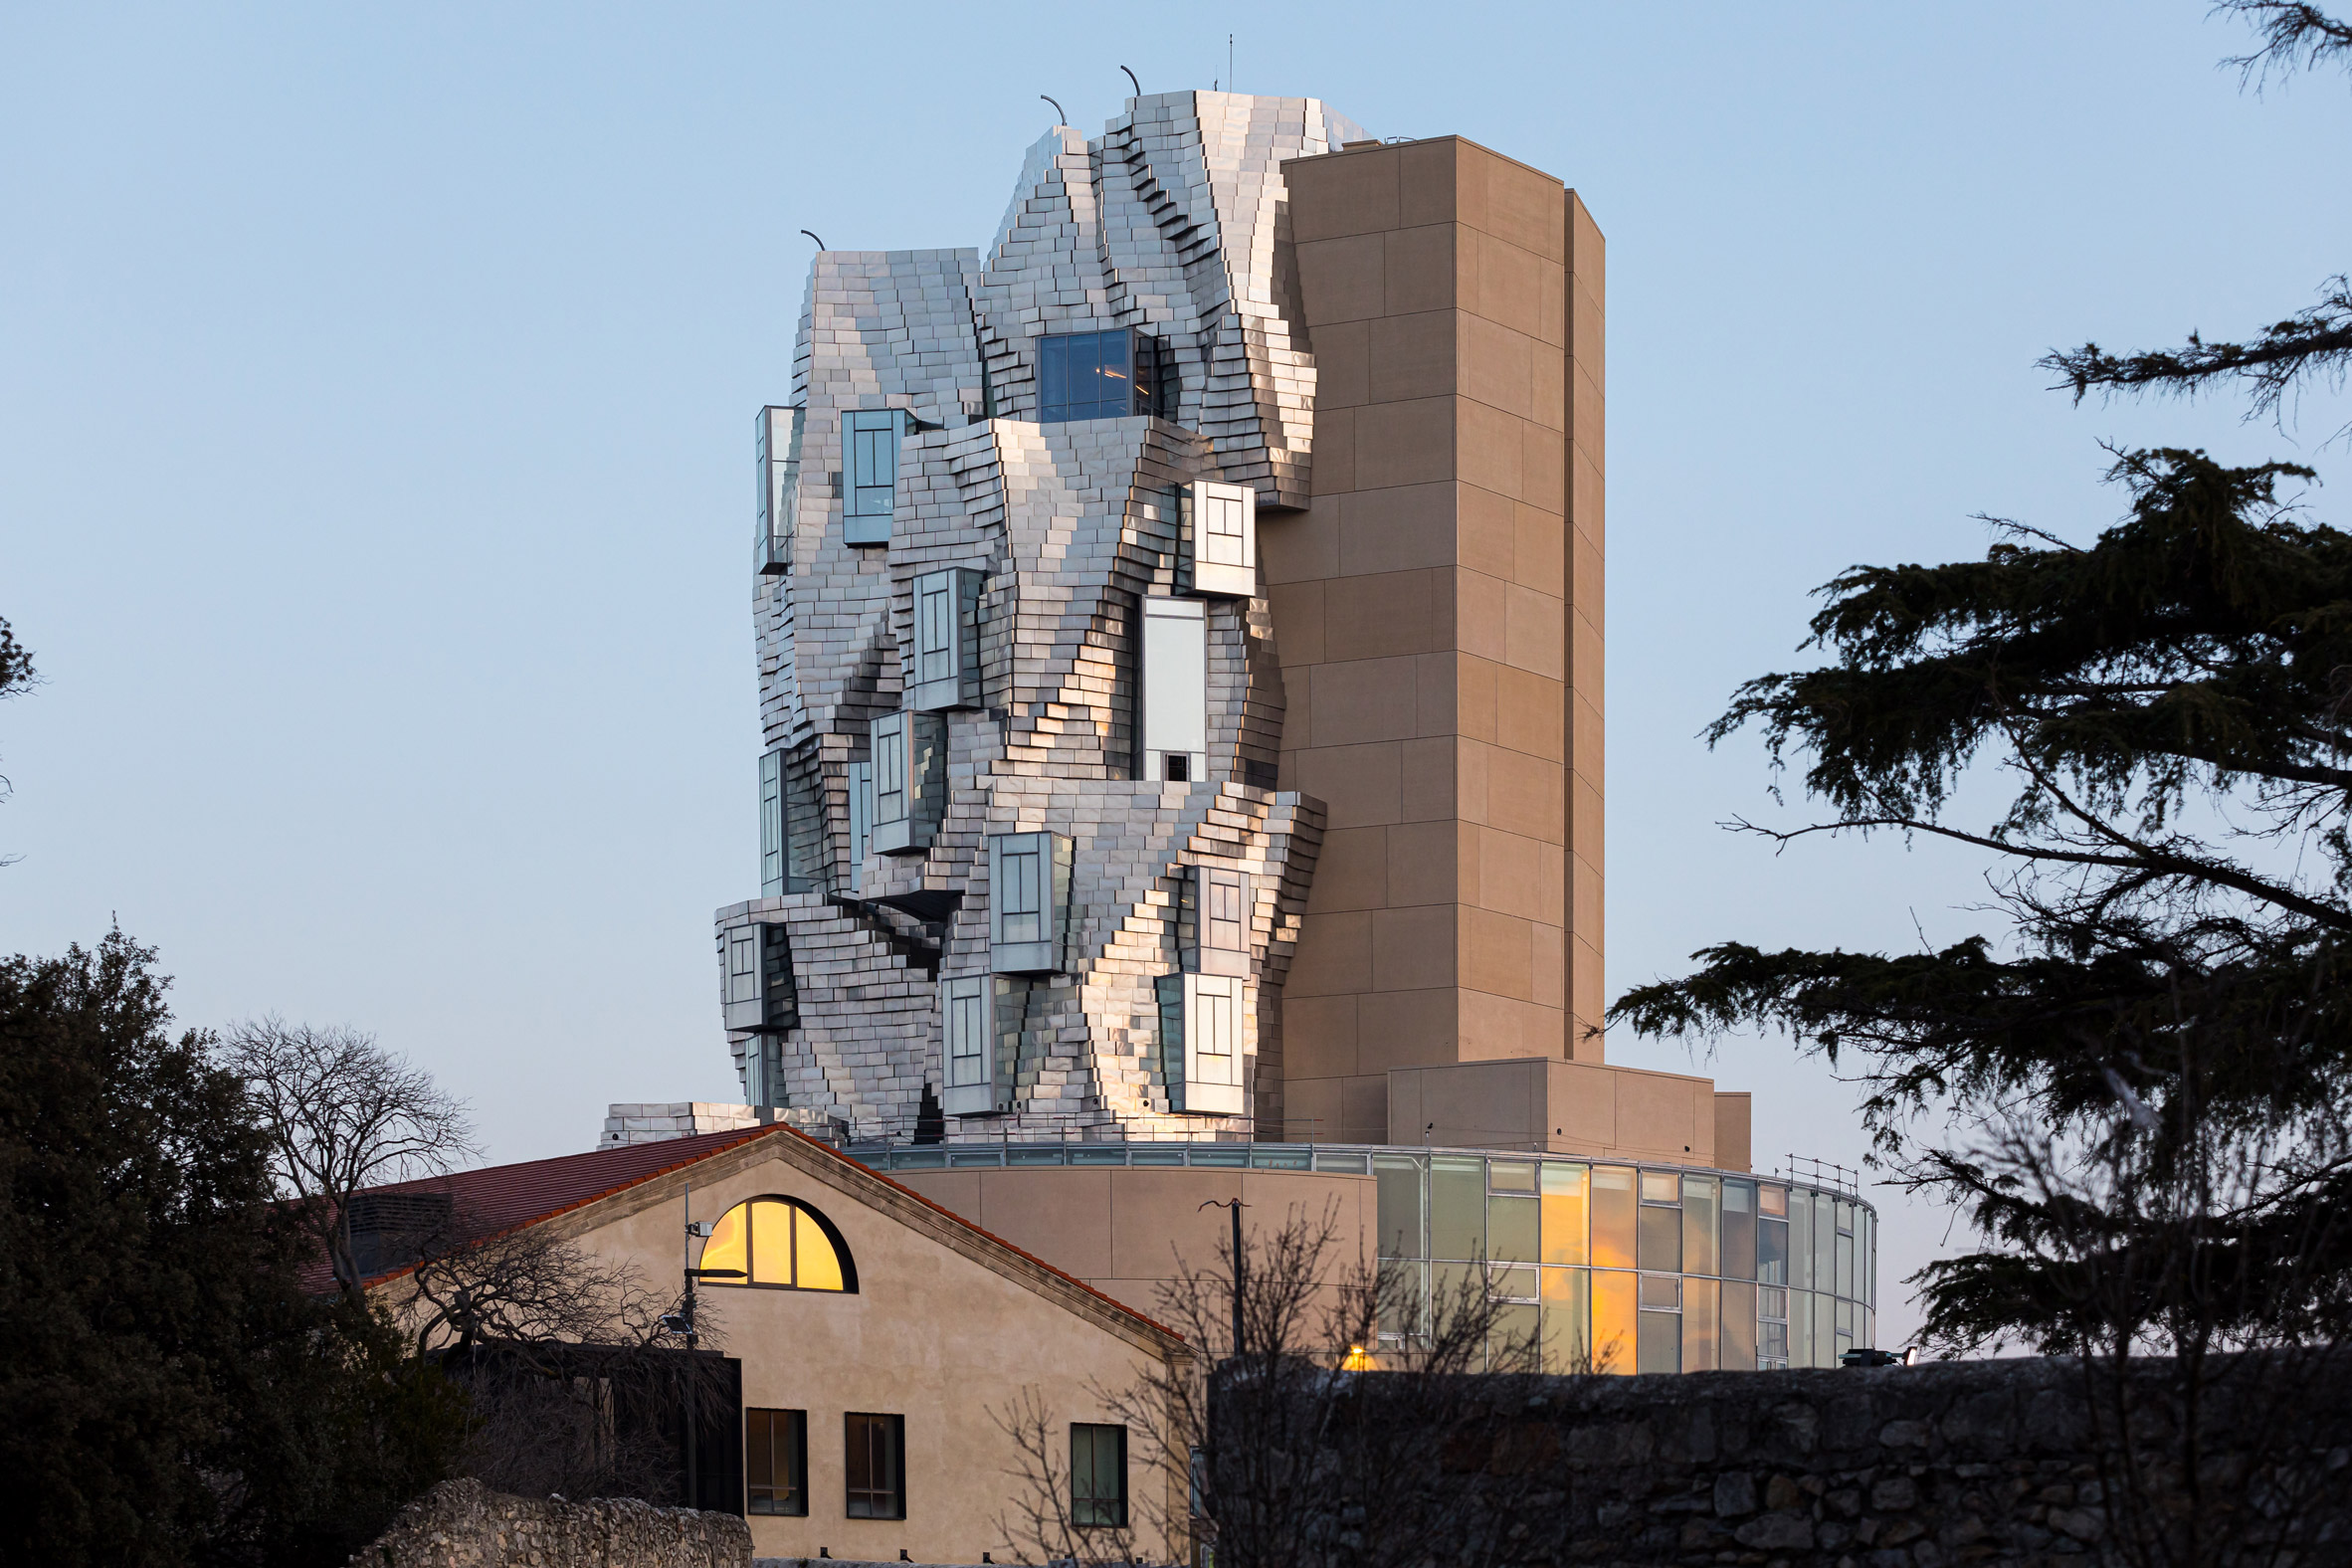 Frank Gehry's Luma Arles arts tower